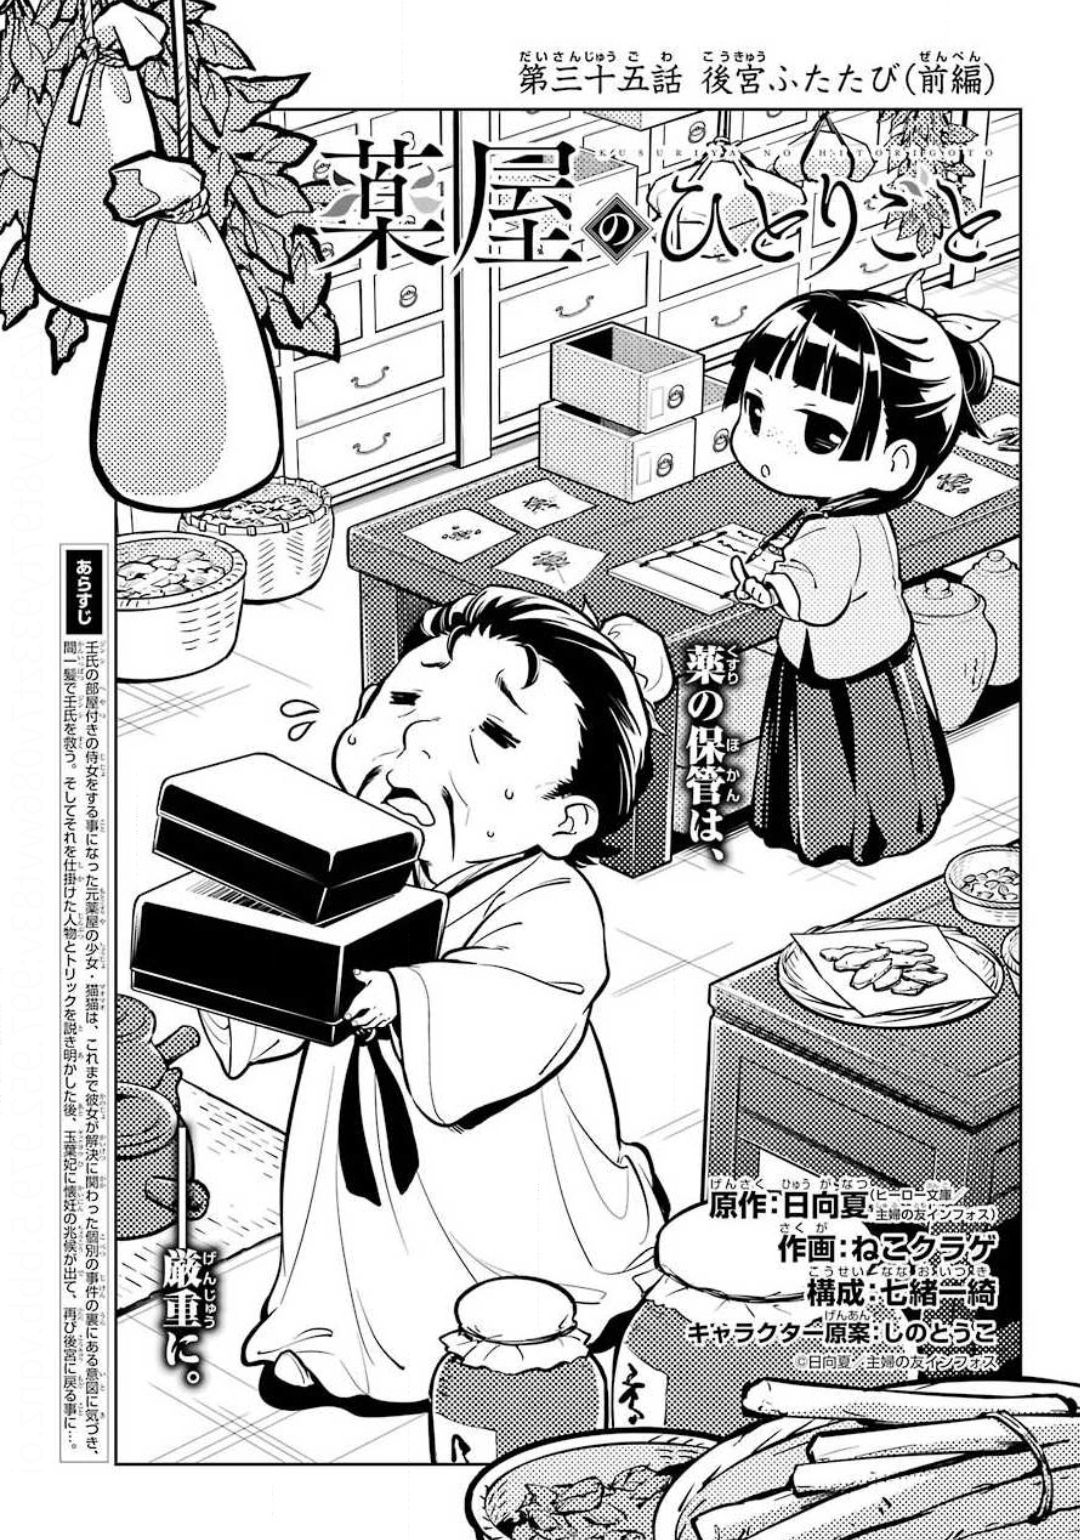 Kusuriya no Hitorigoto - Chapter 35.1 - Page 1